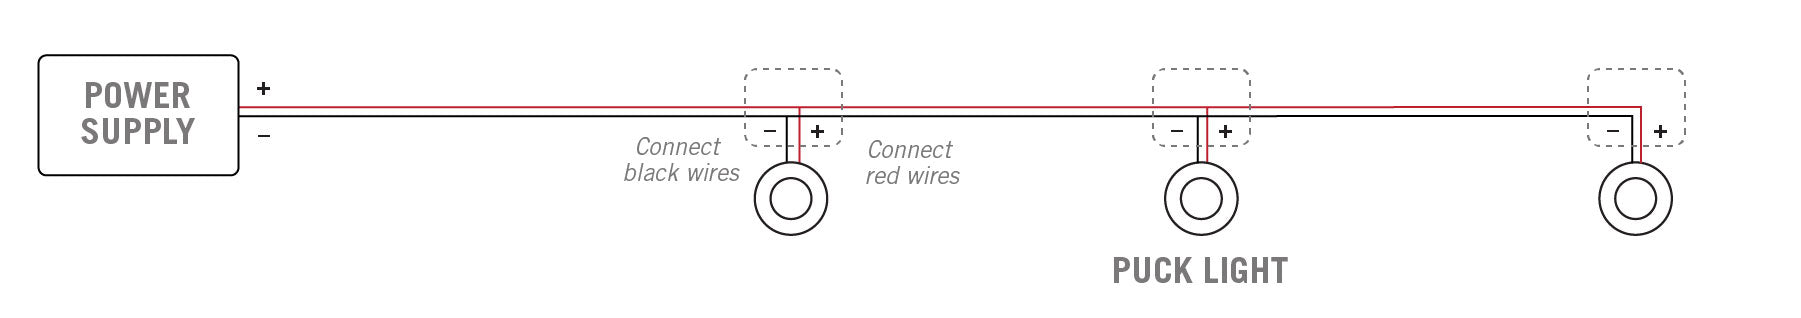 T-Connection method diagram